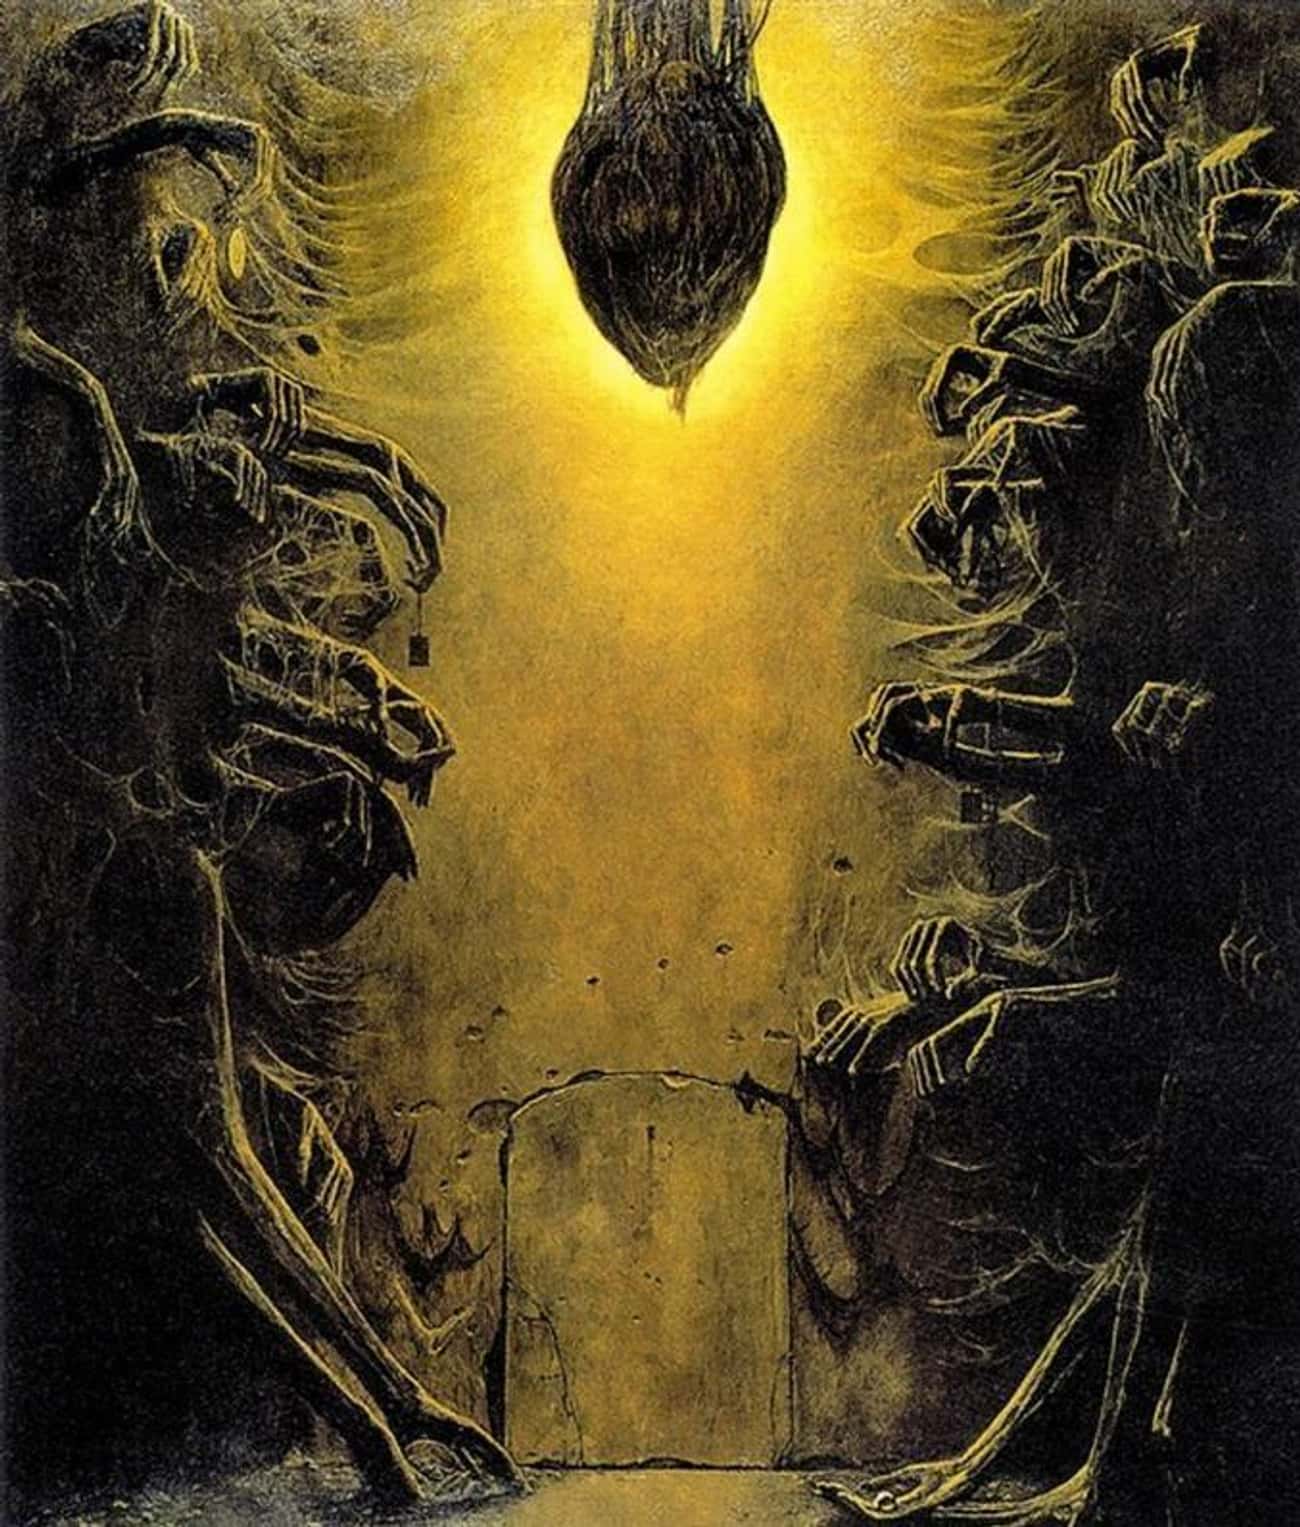 The Nightmare-Inspired Artwork Of Zdzislaw Beksinski